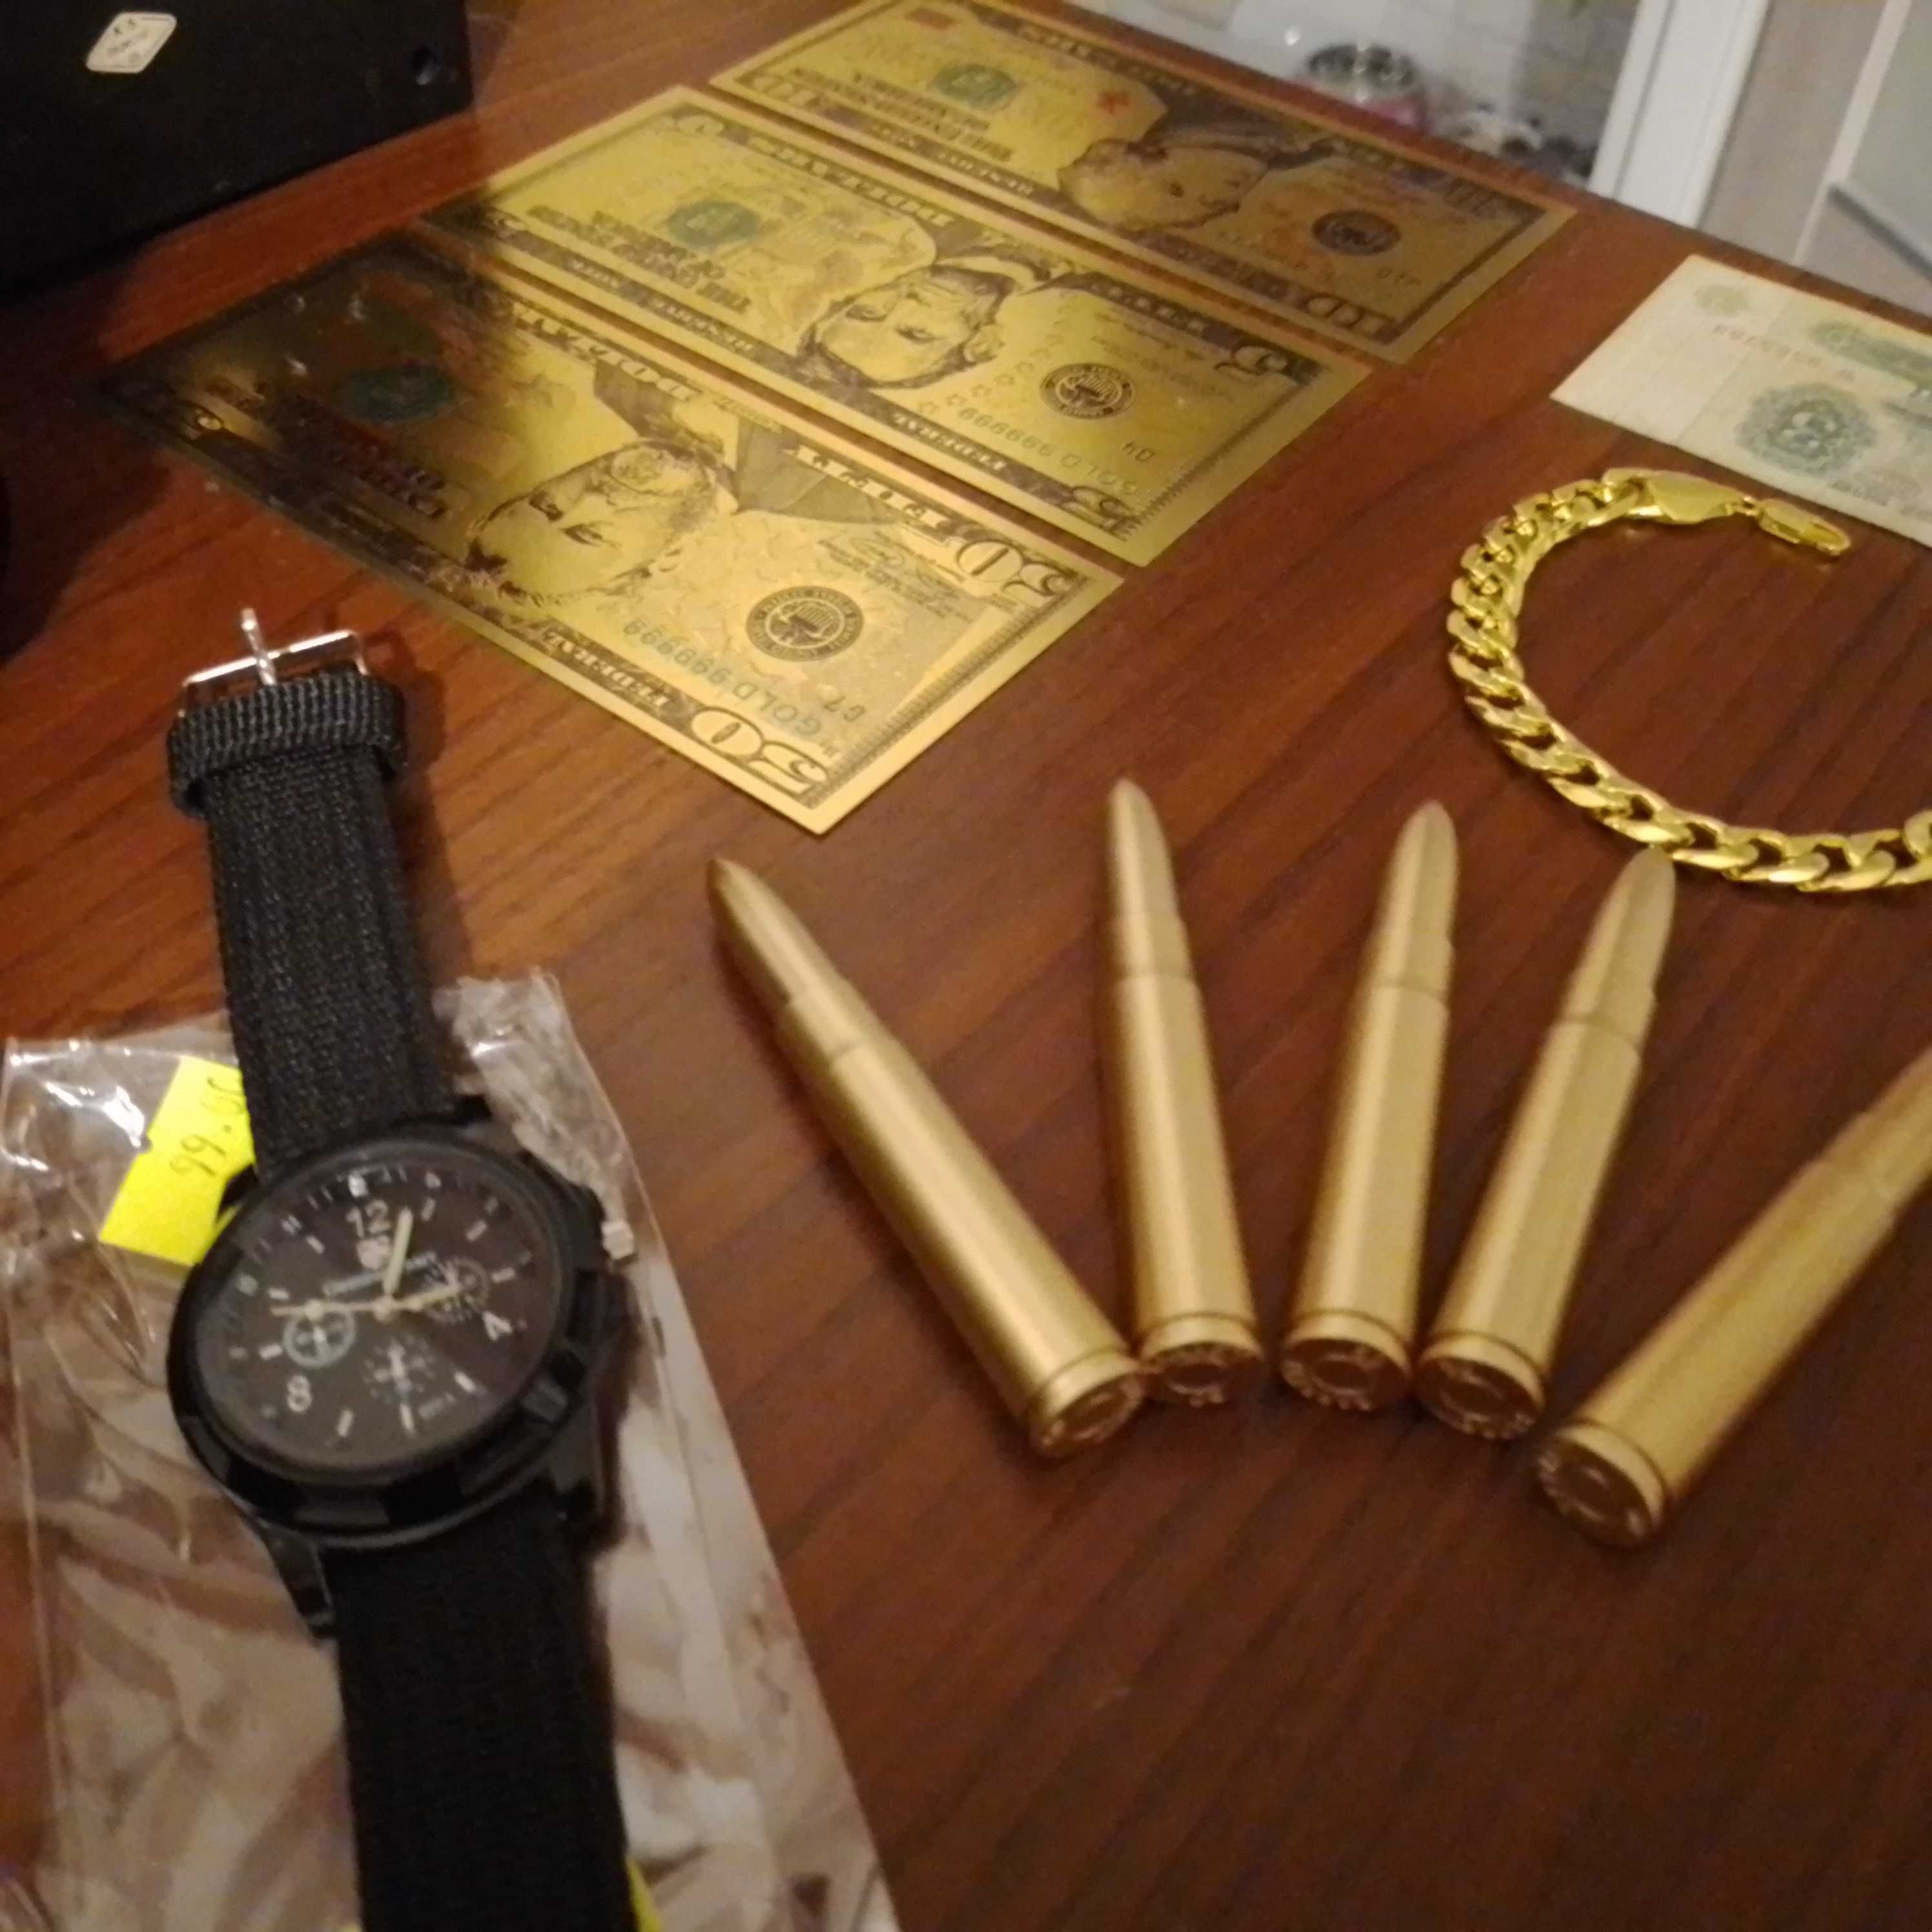 Bransoleta pancerka, banknoty pozłacane, zegarek militarny i inne